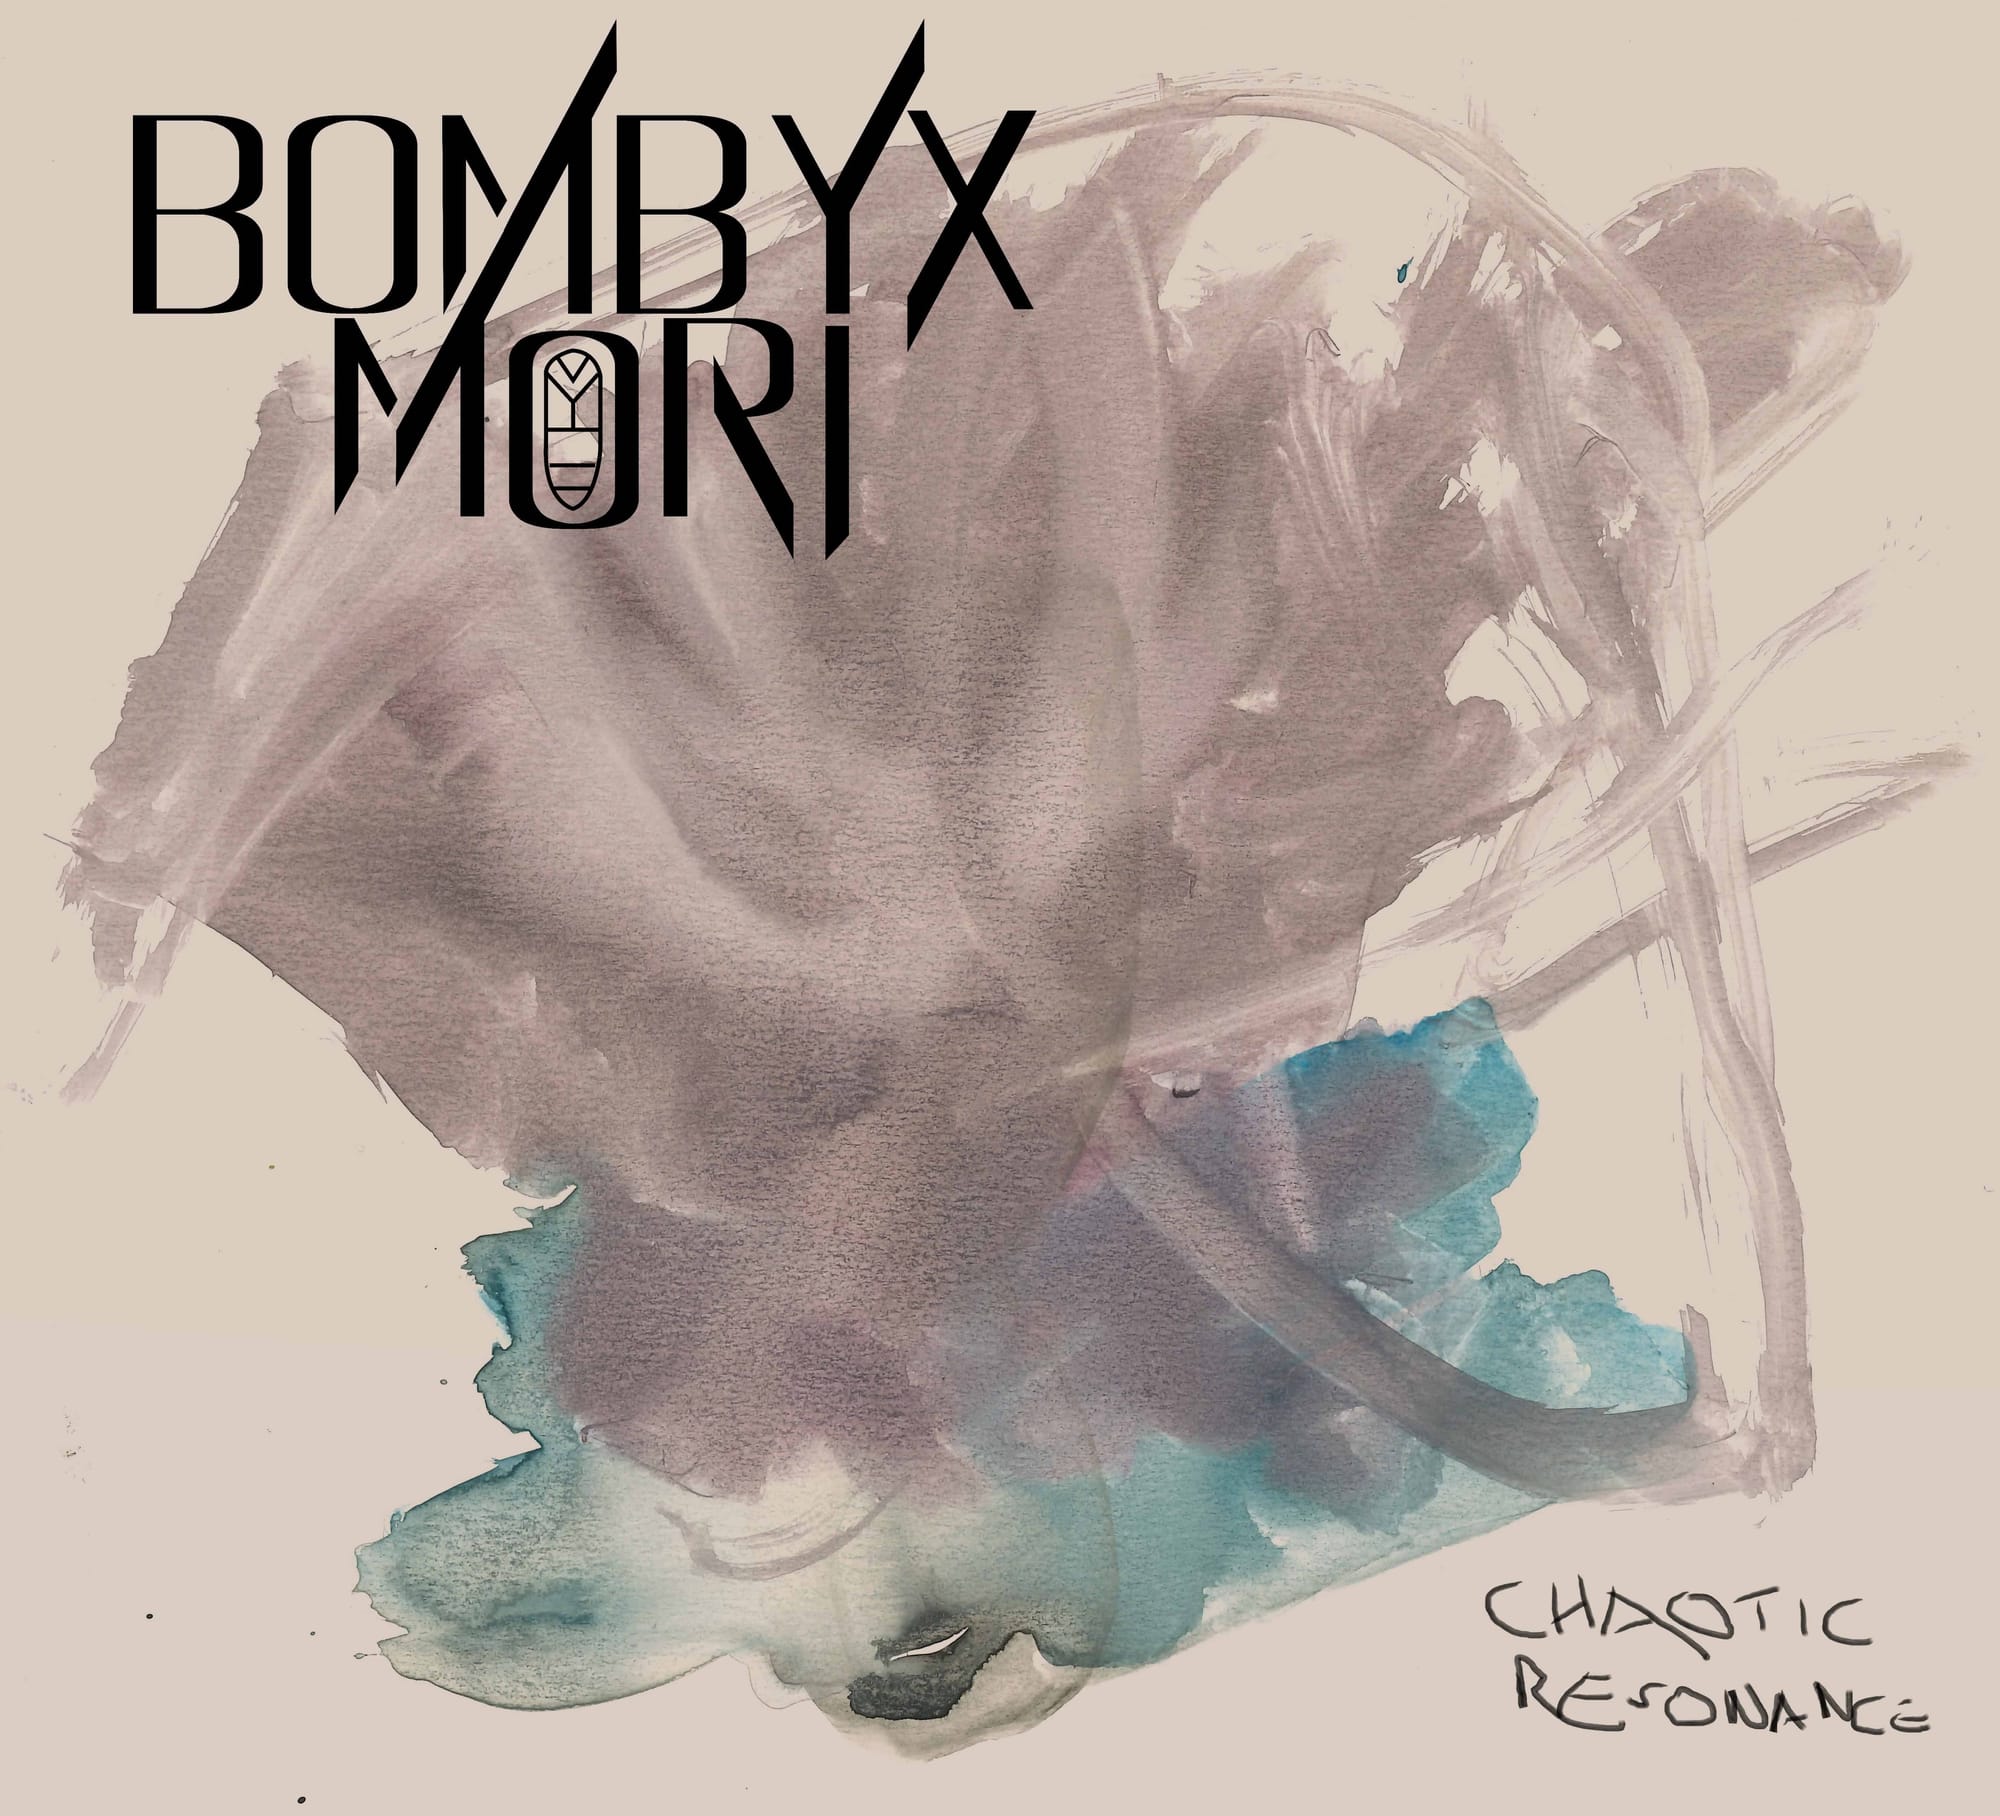 Bombyx Mori Releases Debut Album "Chaotic Resonance"